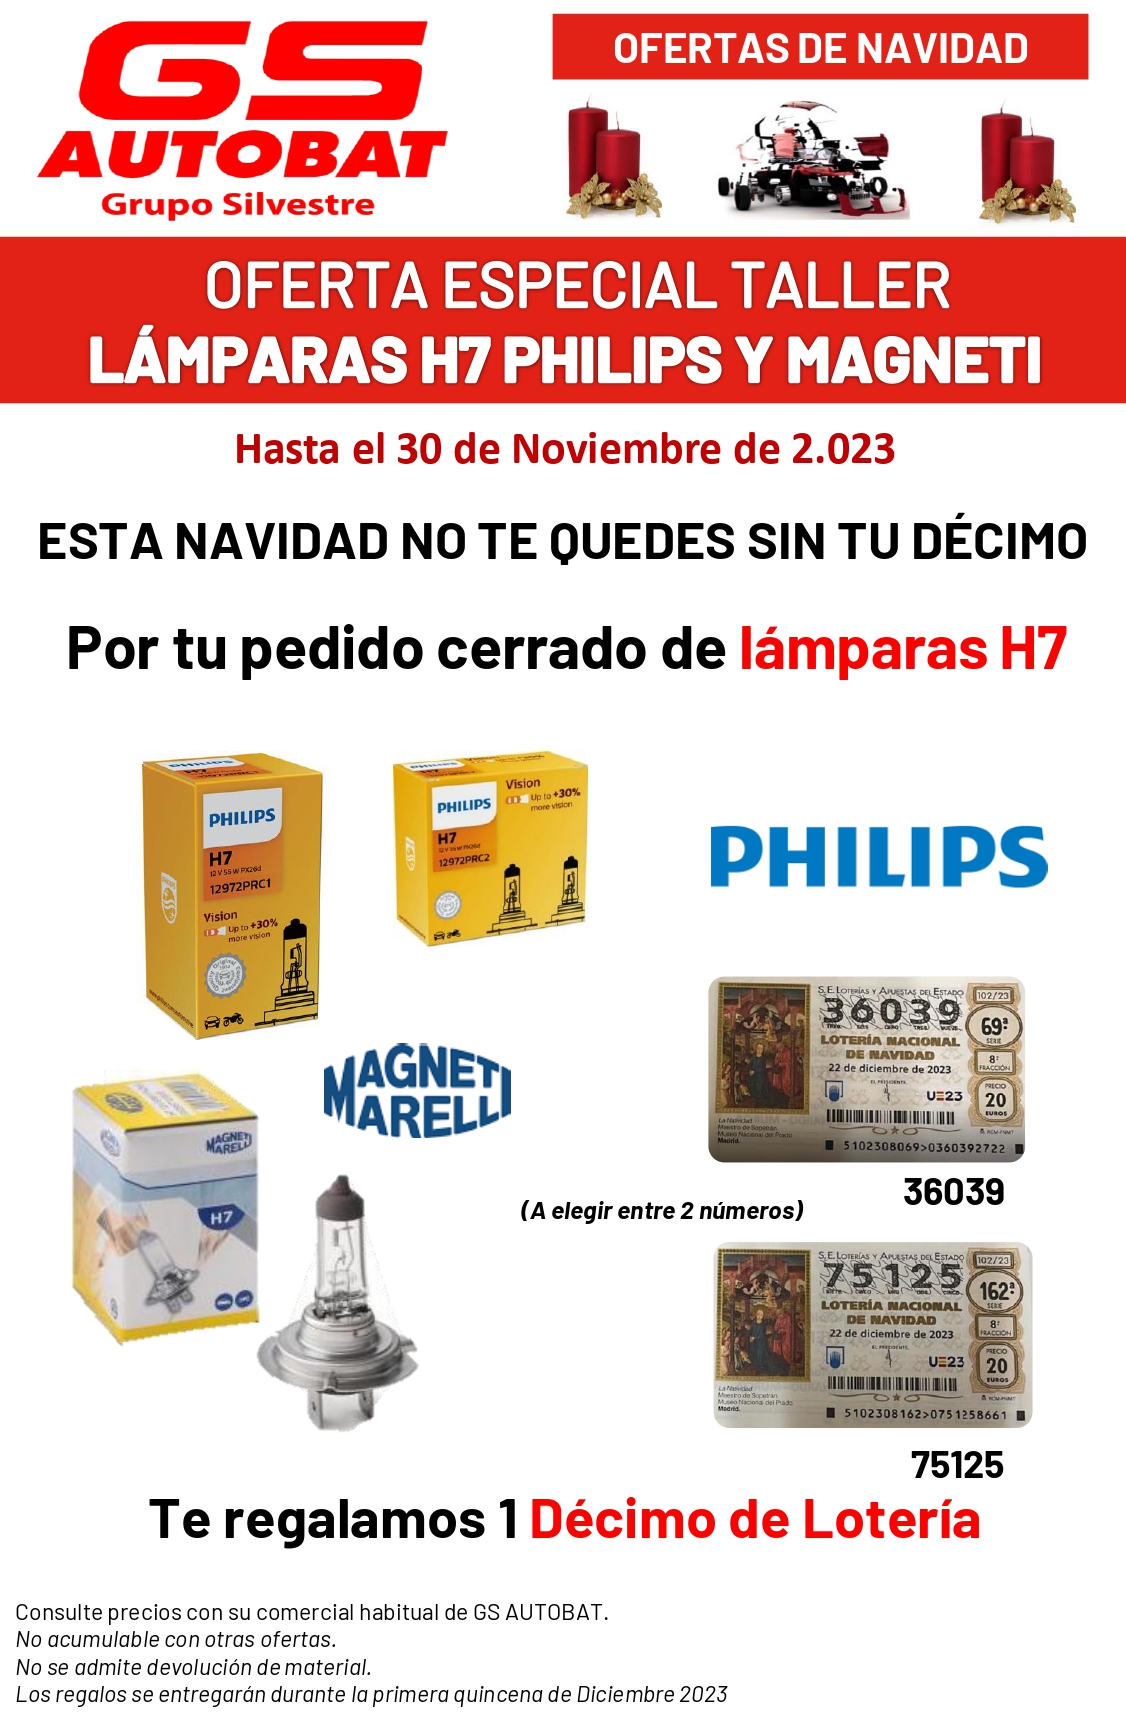 LÁMPARAS PHILIPS Y MAGNETI MARELLI